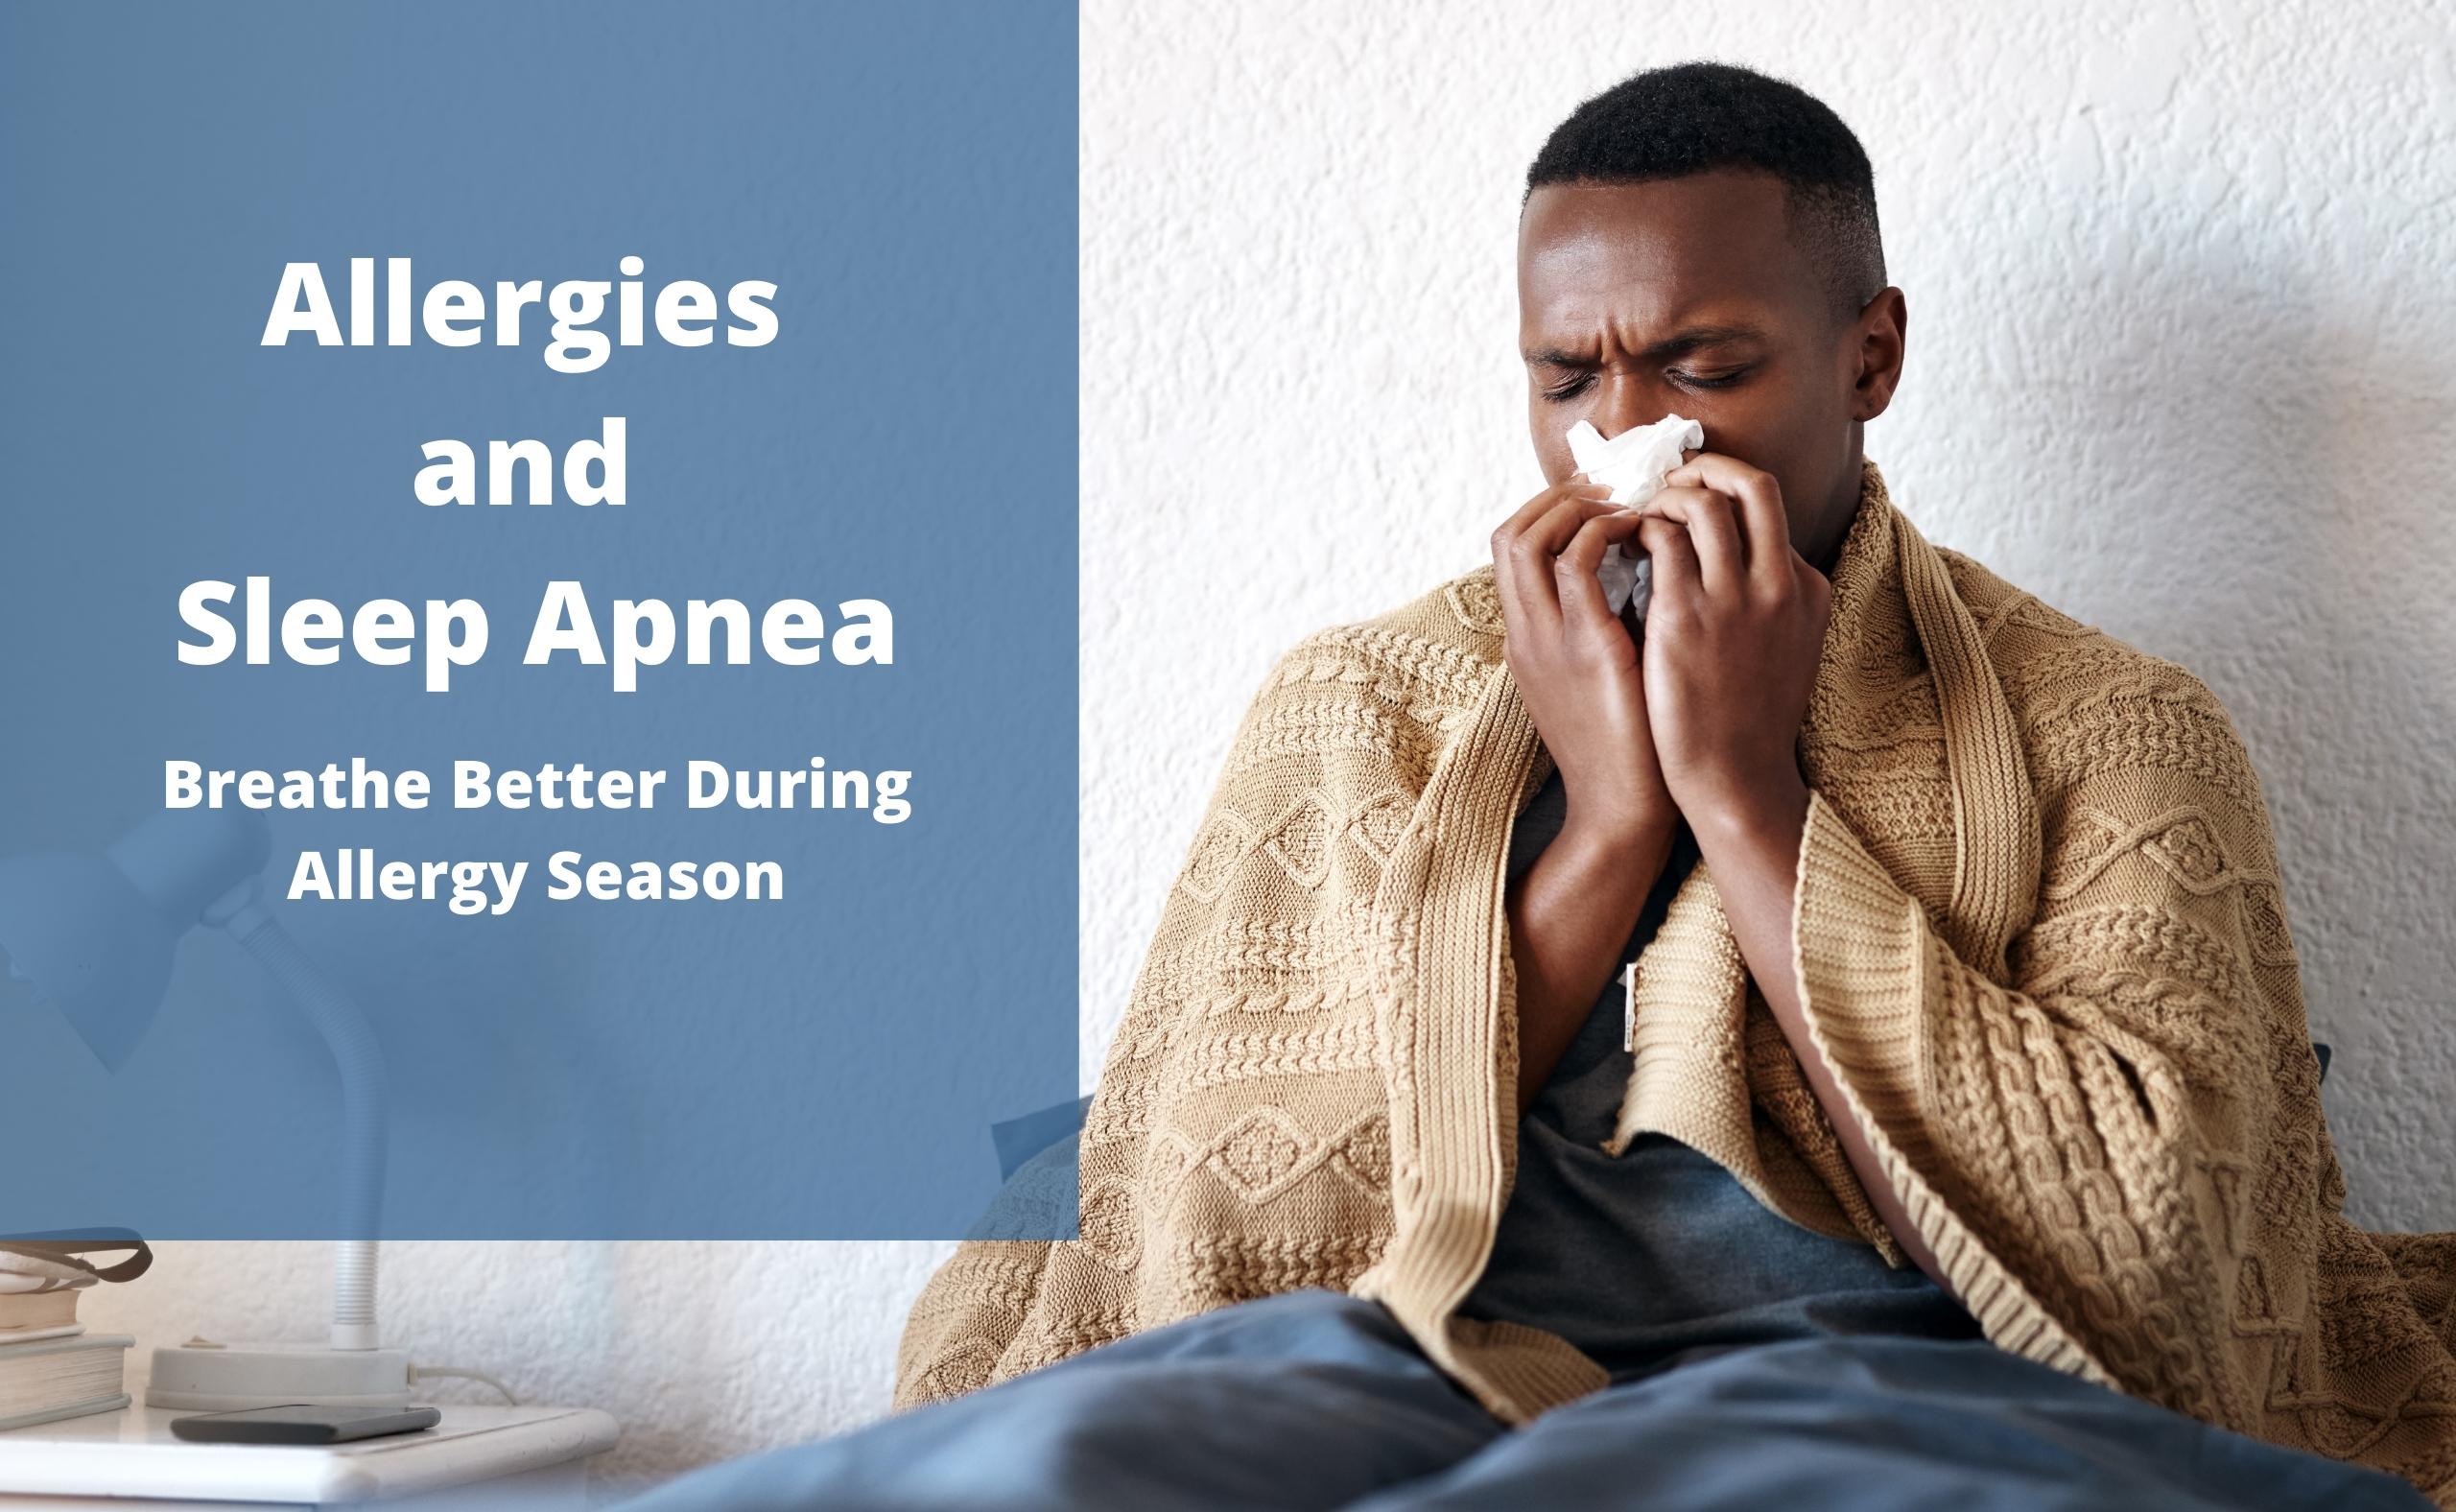 Seasonal allergy sufferer with allergies and sleep apnea needing relief during allergy season.